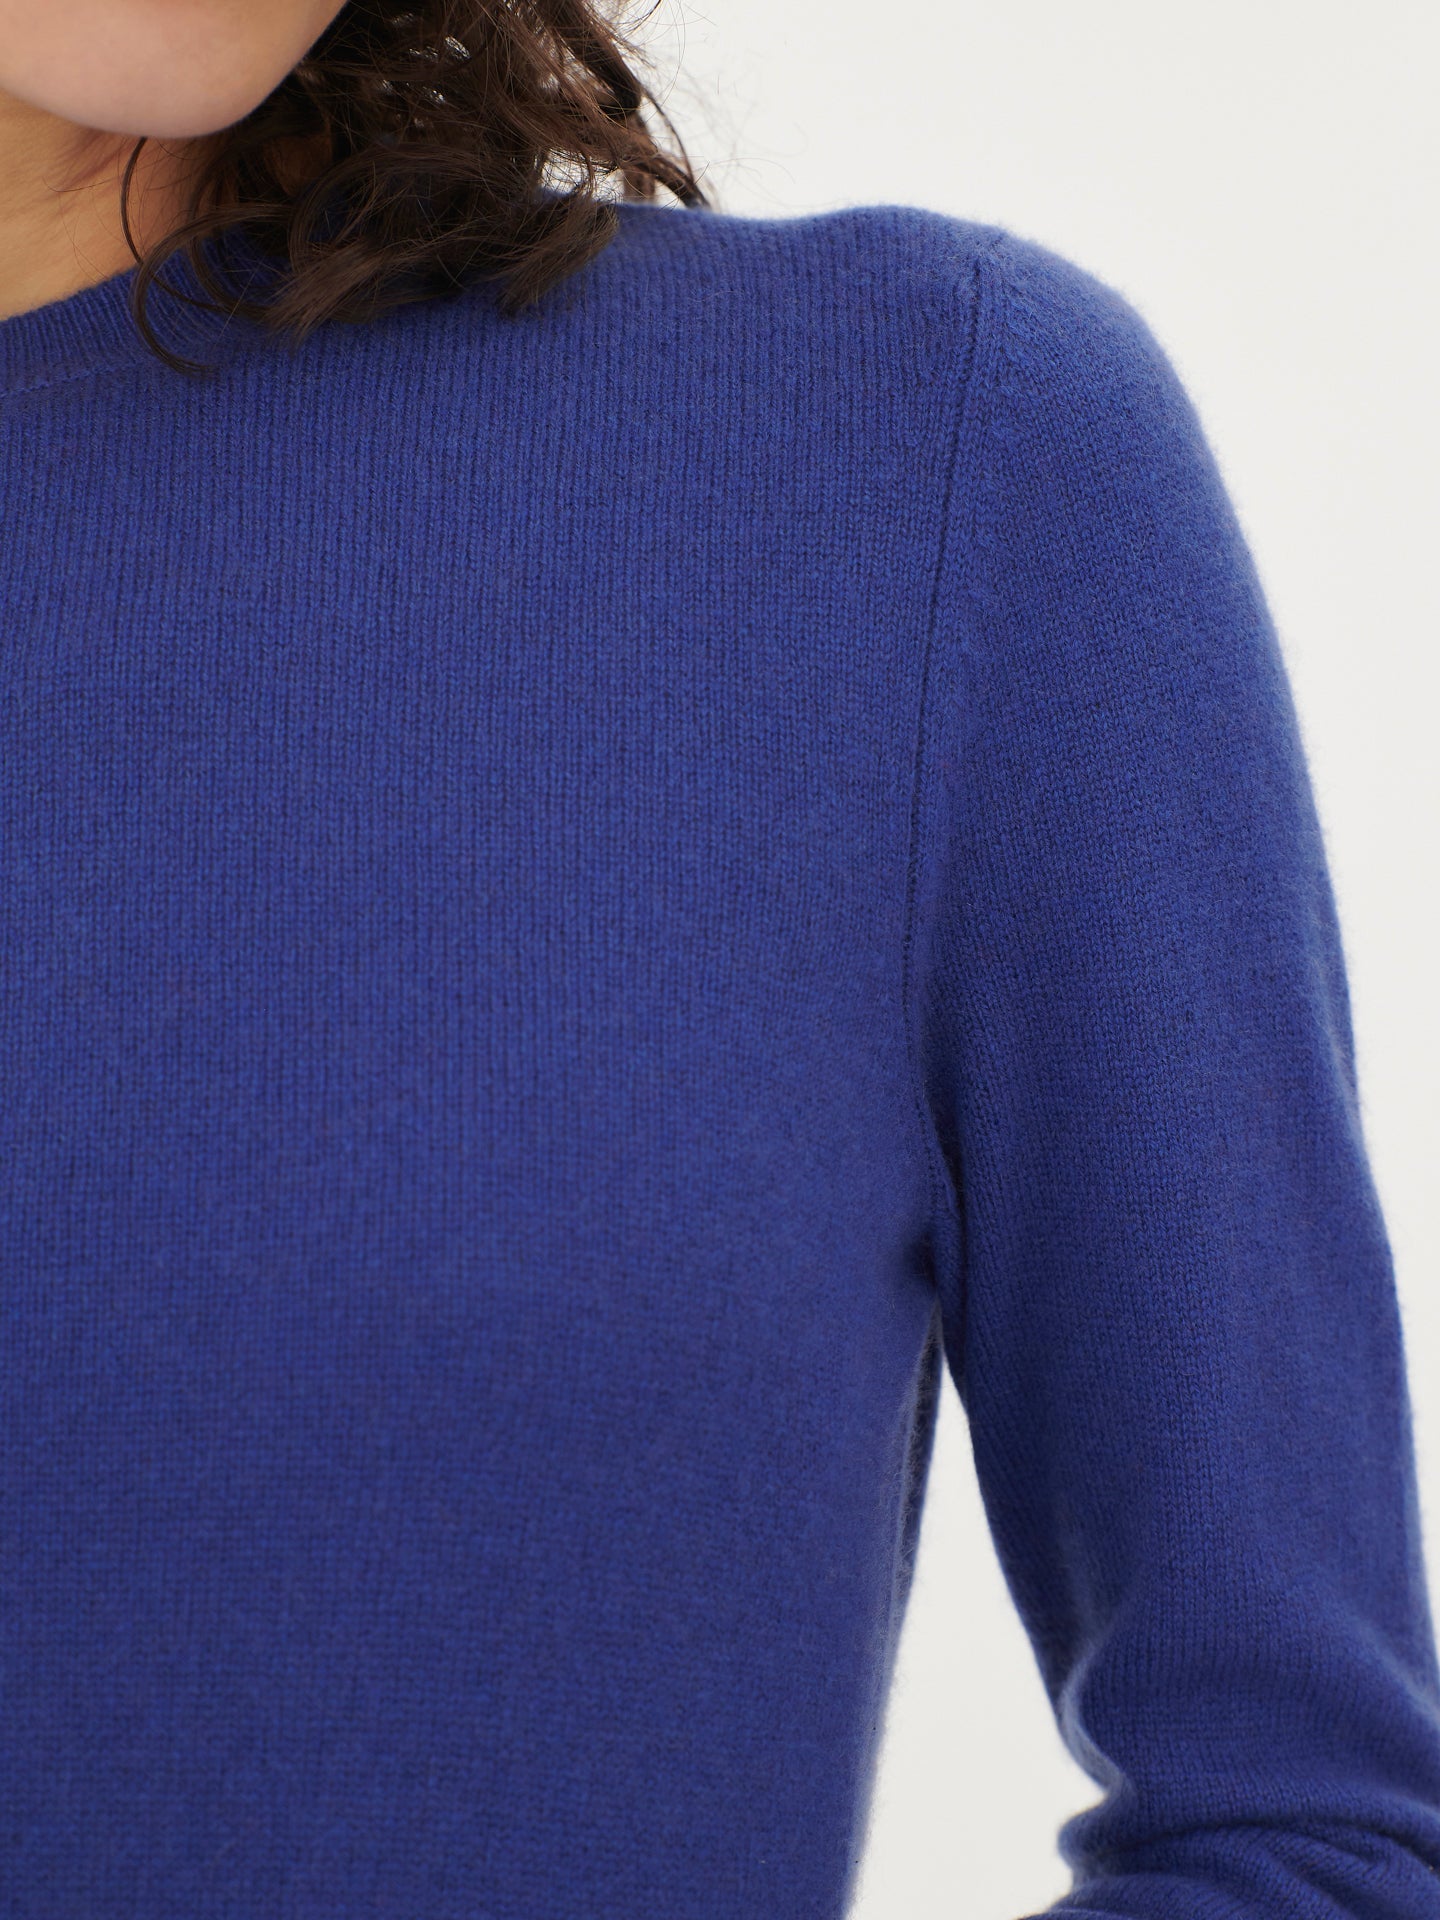 Women's Cashmere $99 Hat & Sweater Twilight Blue - Gobi Cashmere